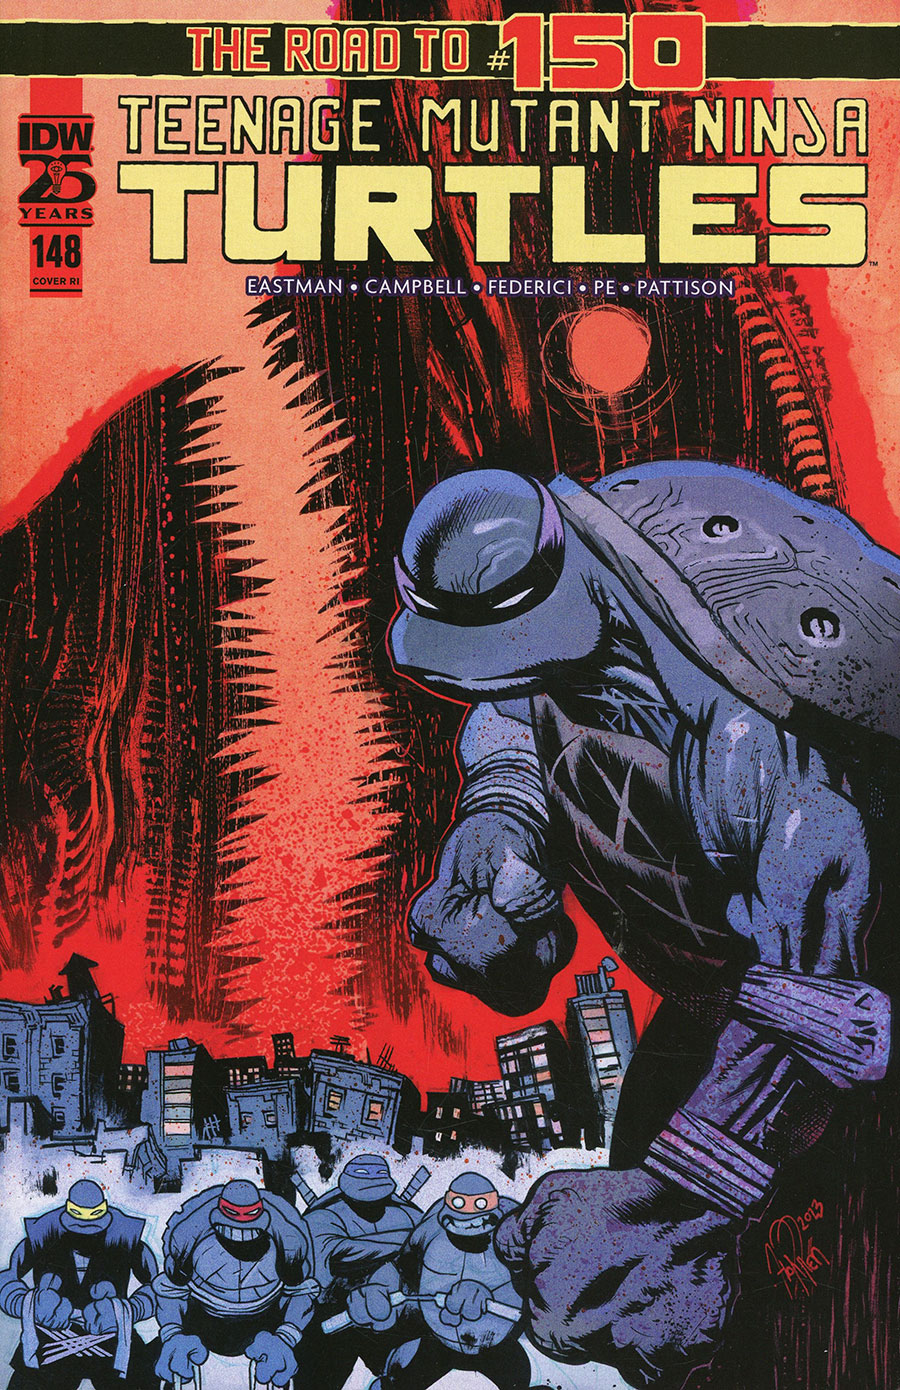 Teenage Mutant Ninja Turtles Vol 5 #148 Cover C Incentive James Harren Variant Cover